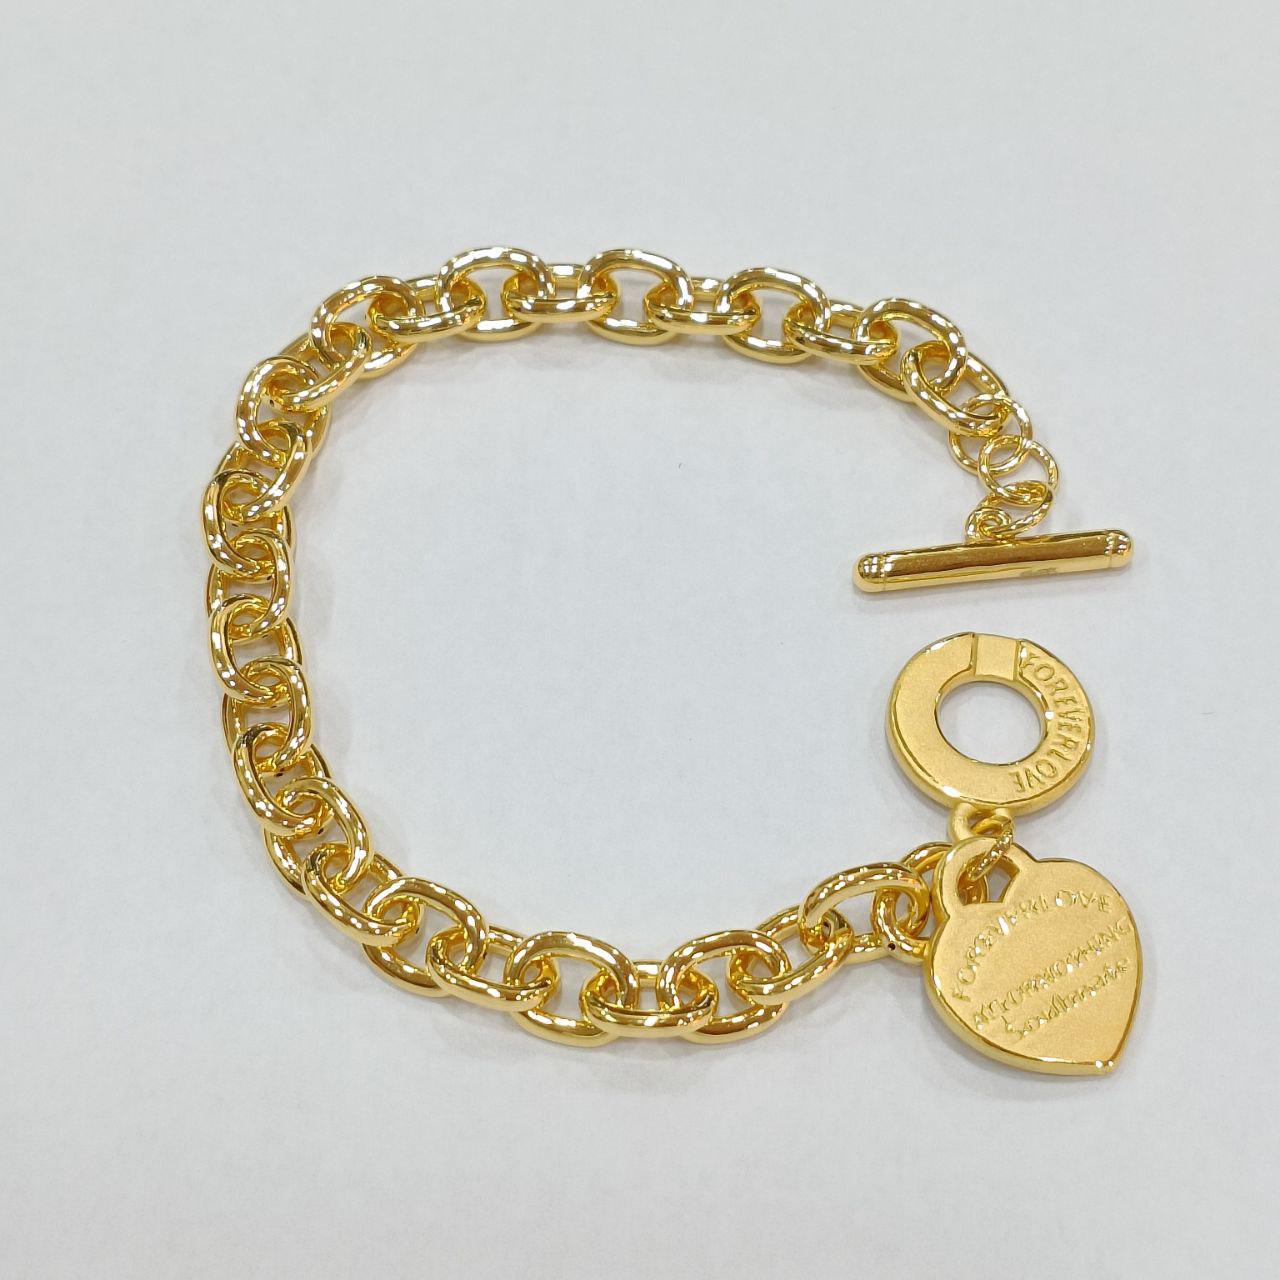 24k / 999 Gold Chain with heart pendant bracelet-Bracelets-Best Gold Shop